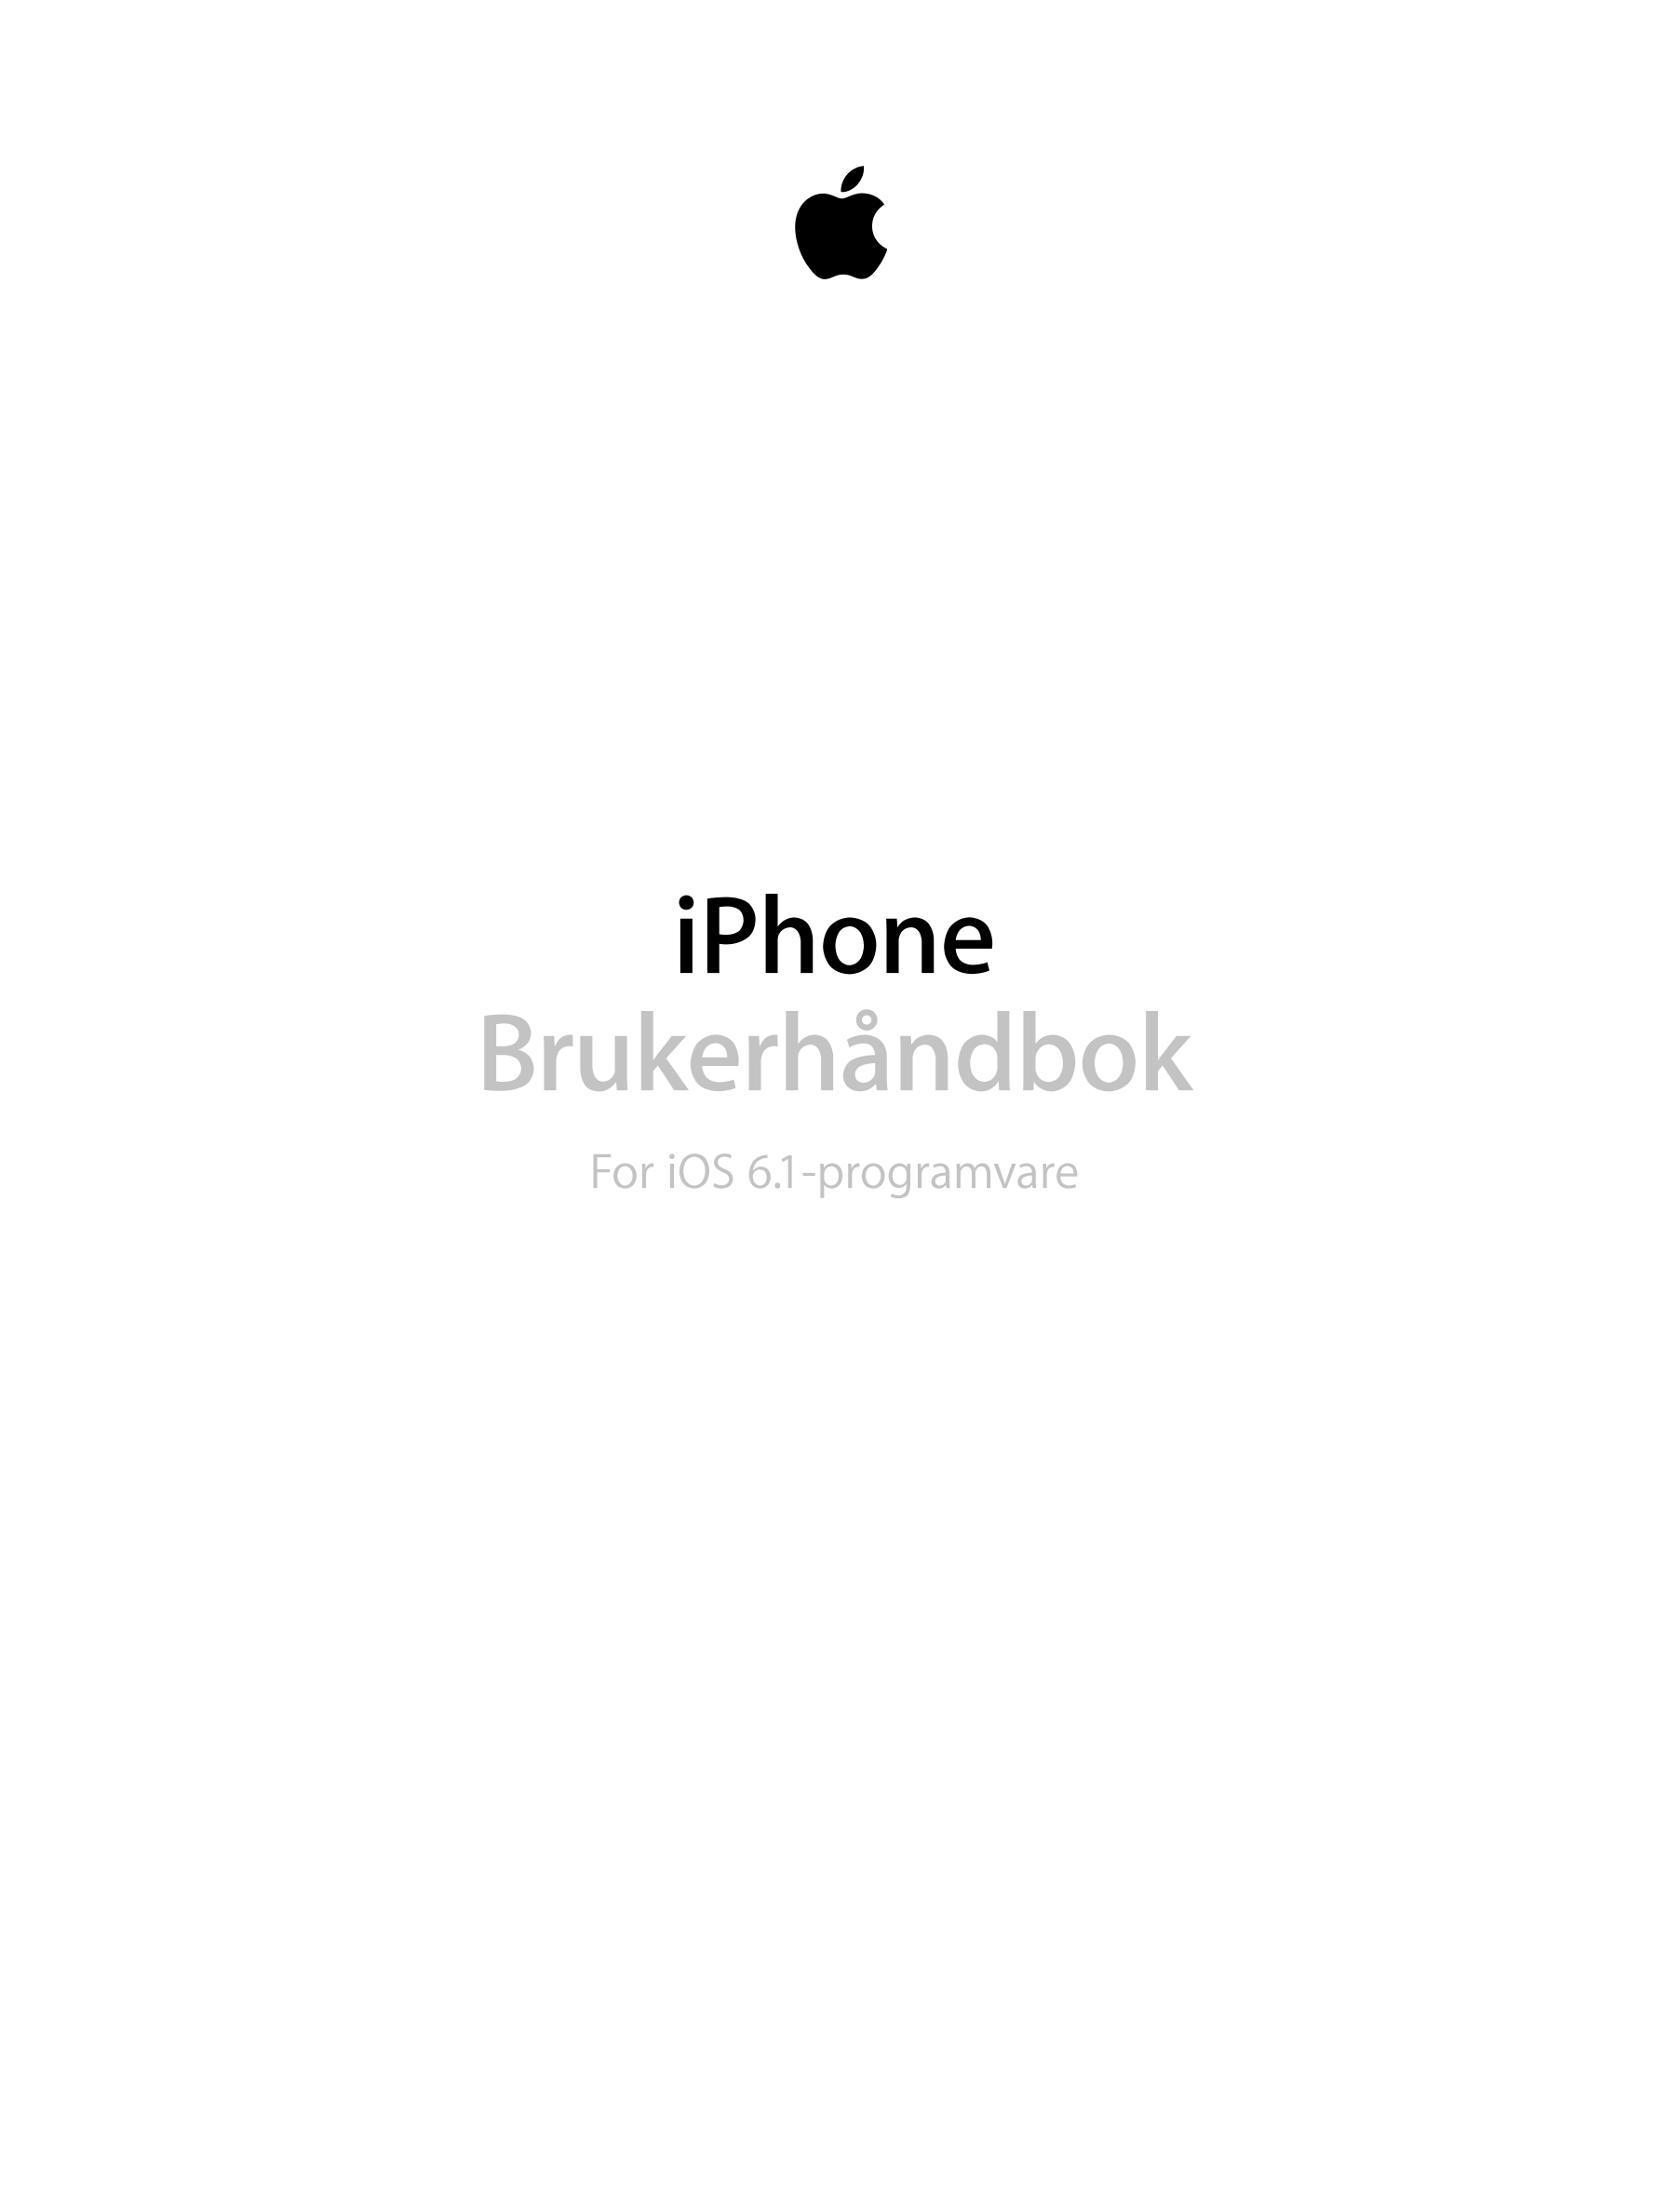 iPhone
Brukerhåndbok
For iOS 6.1-programvare